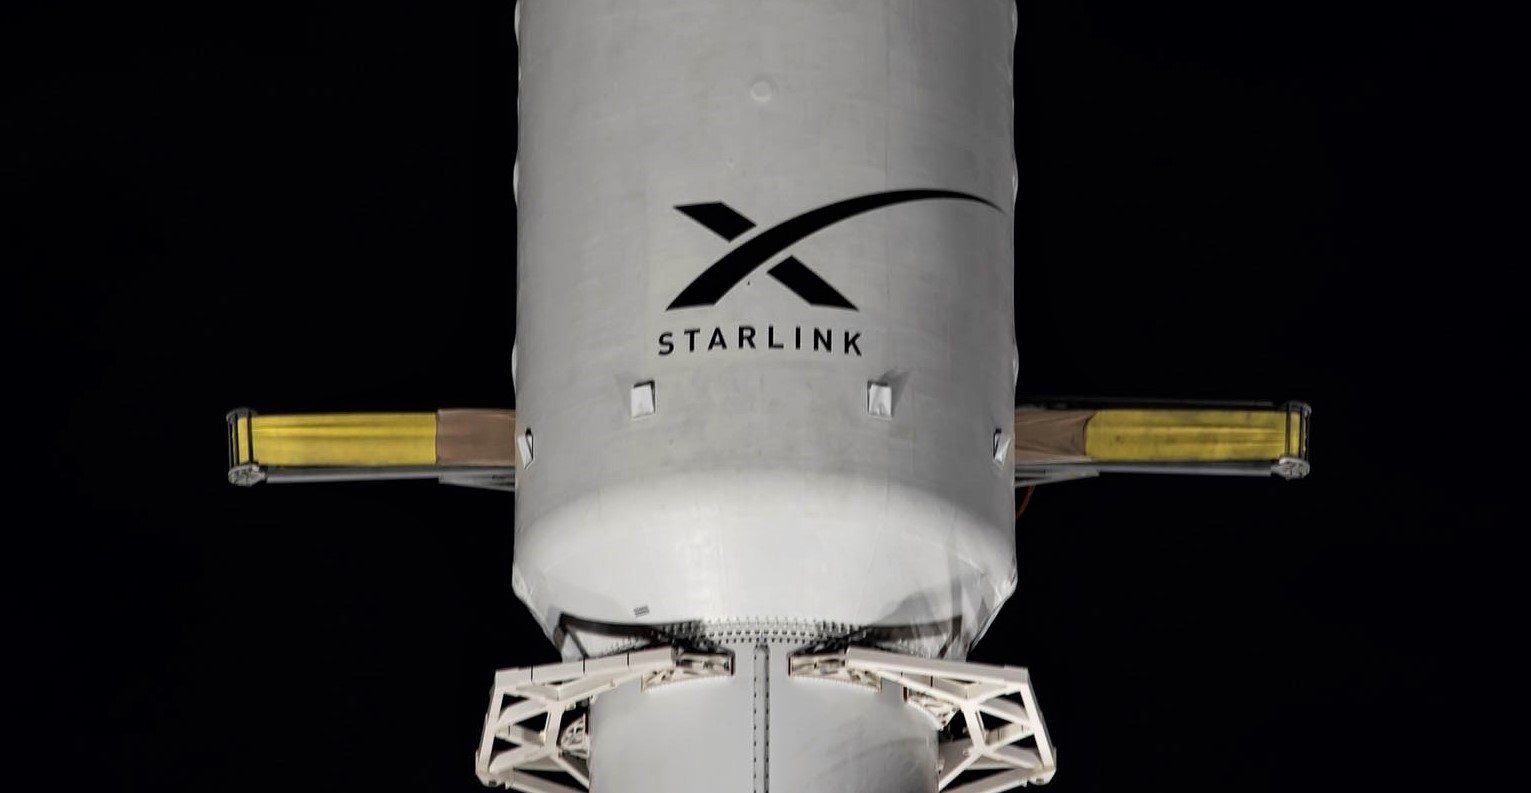 Starlink-1 Falcon 9 B1048 LC-40 vertical 111019 (SpaceX) 1 fairing 2